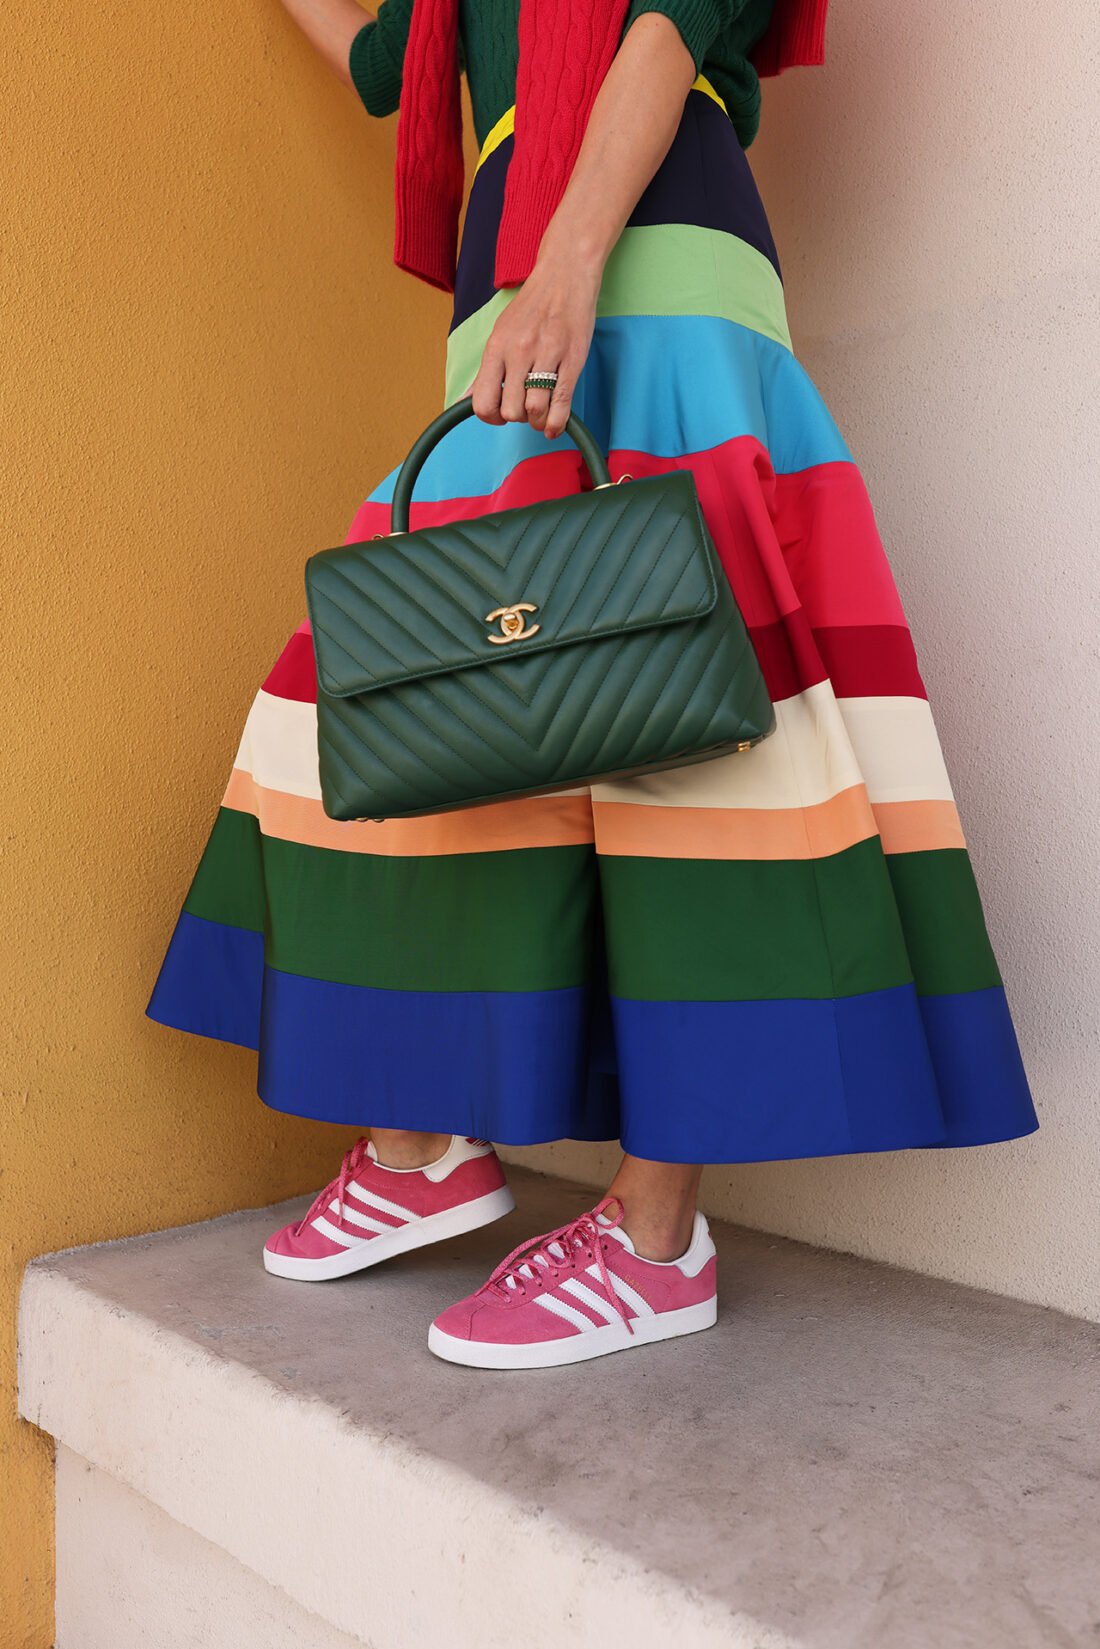 pink adidas gazelle sneakers, green chanel bag